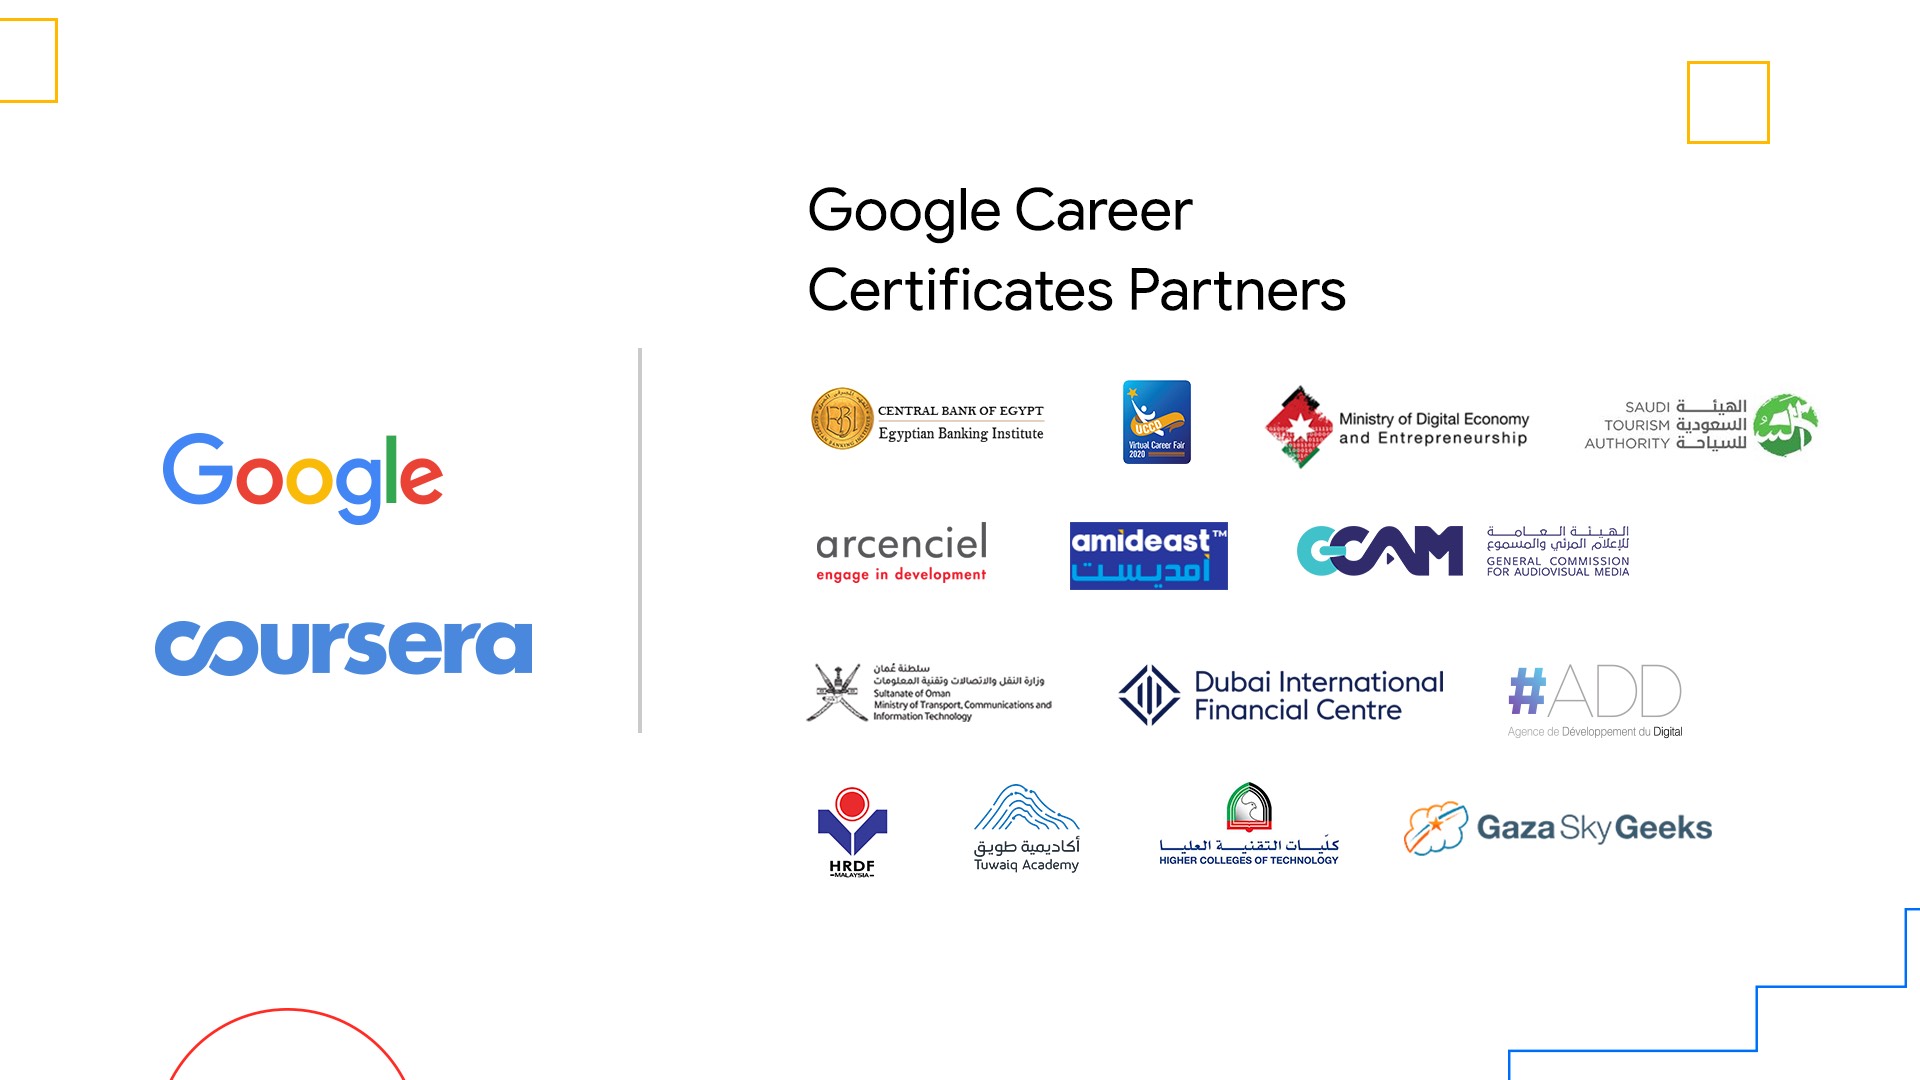 Google Career Certificate partner logos